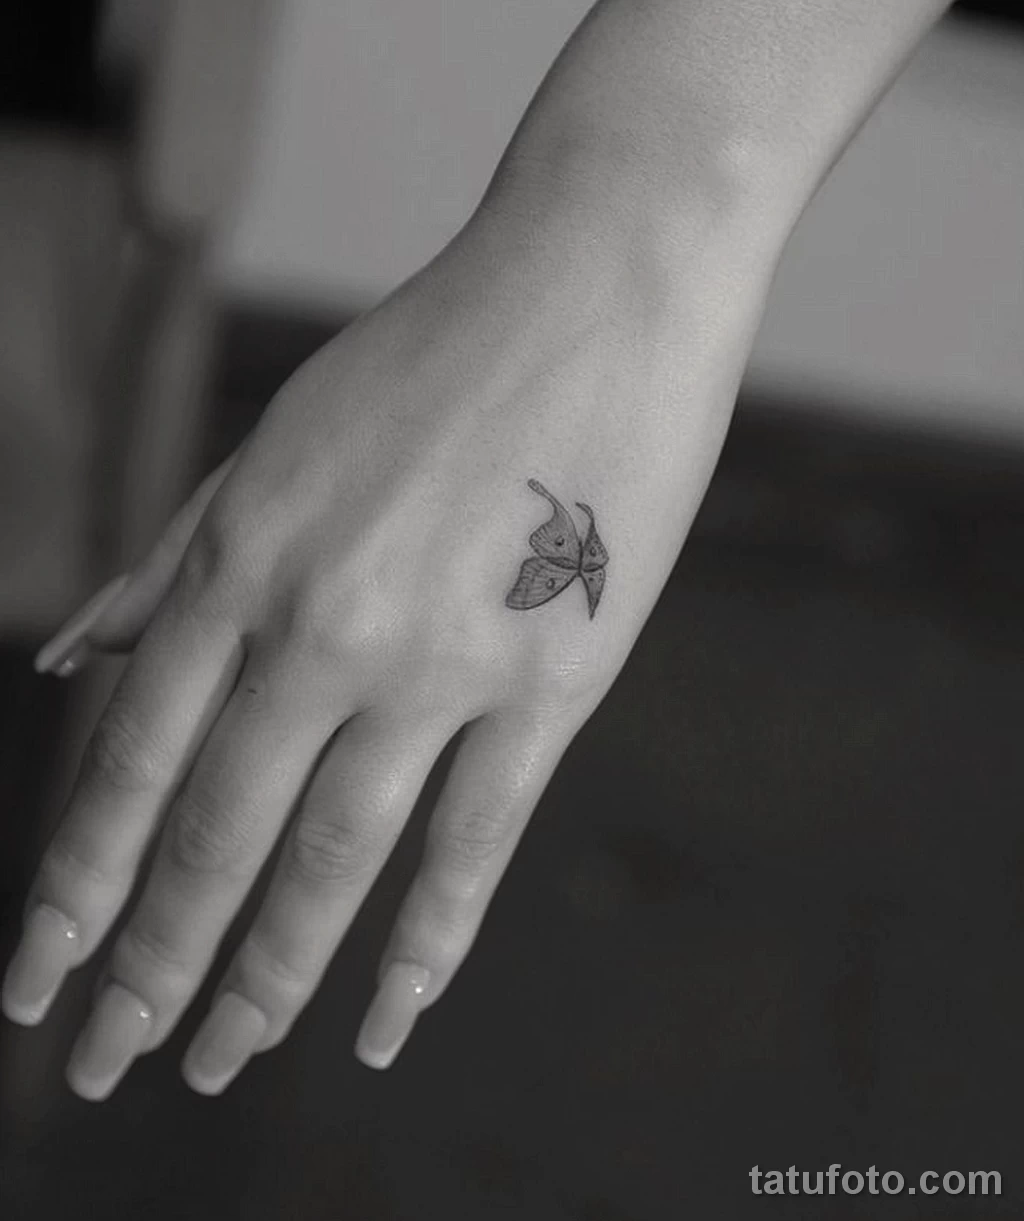 Алекса Деми (сериал Эйфория) сделала мини тату с бабочкой на руке от Доктора Ву - фото 20032022 2